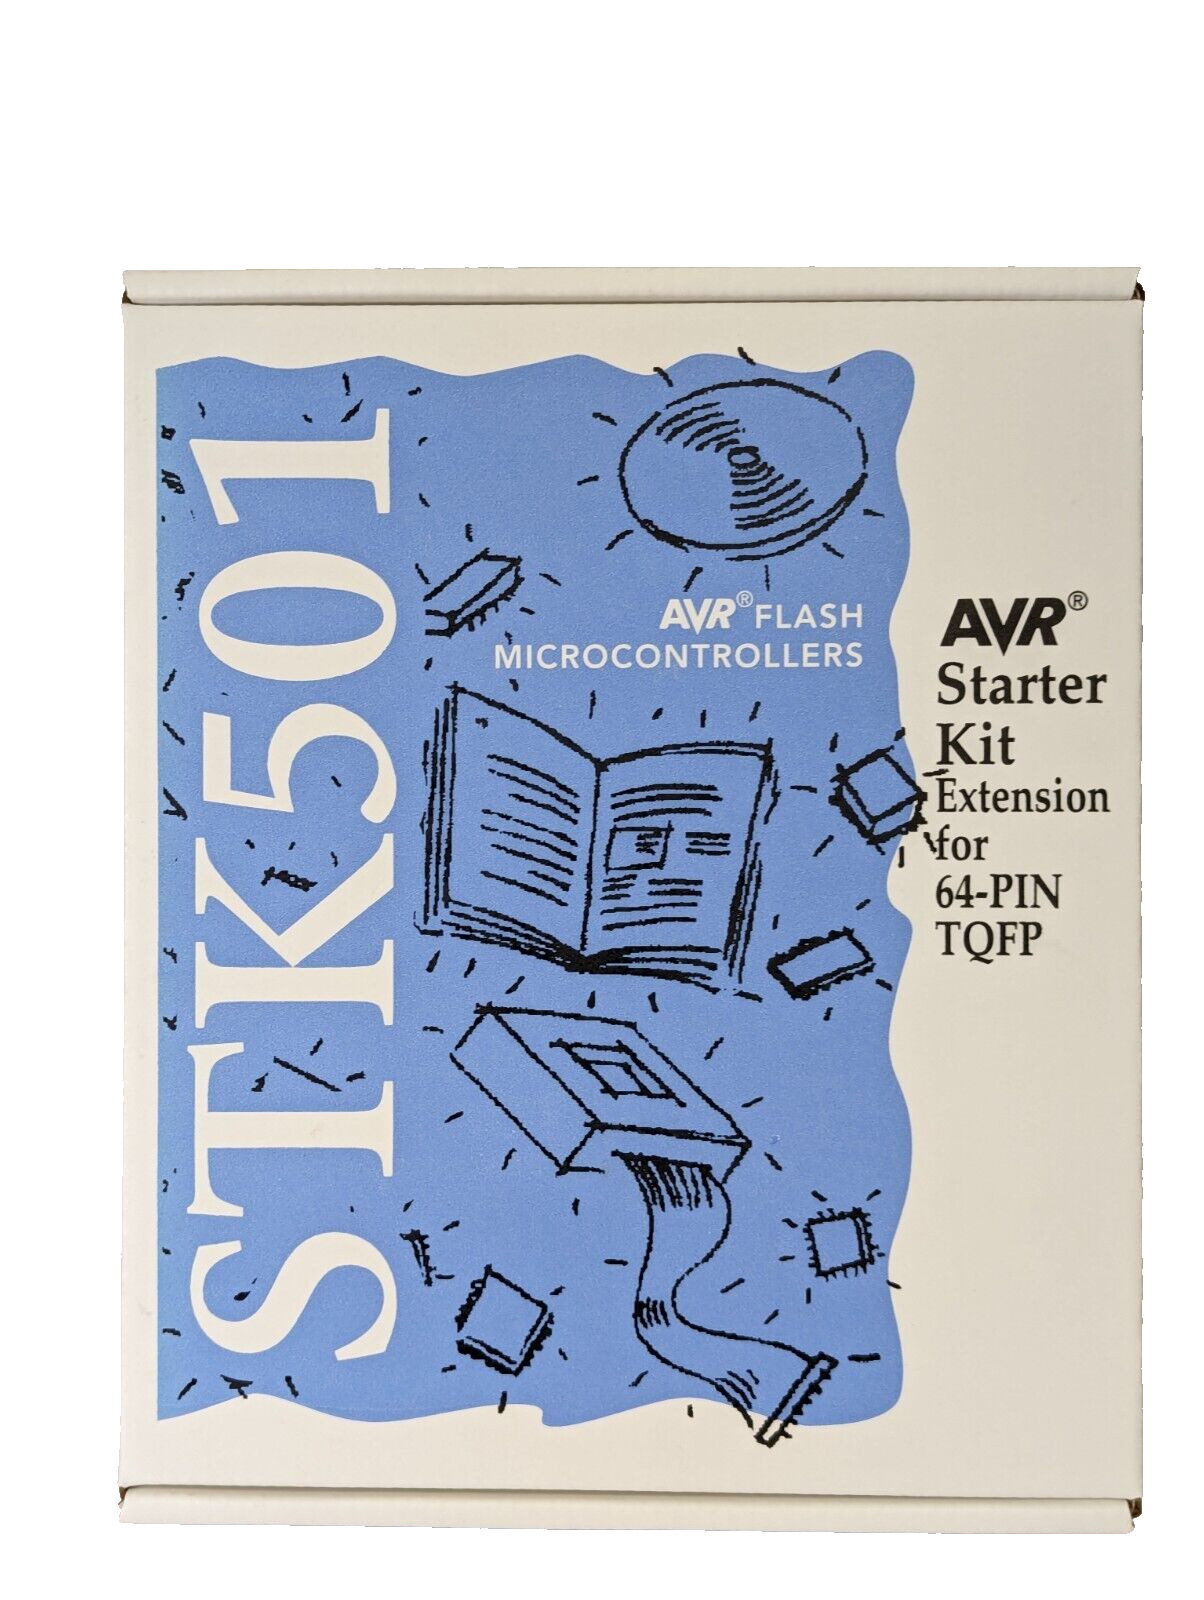 AVR STK501 Starter Kit Extension for 64-PIN TQFP AVR Flash Microcontrollers